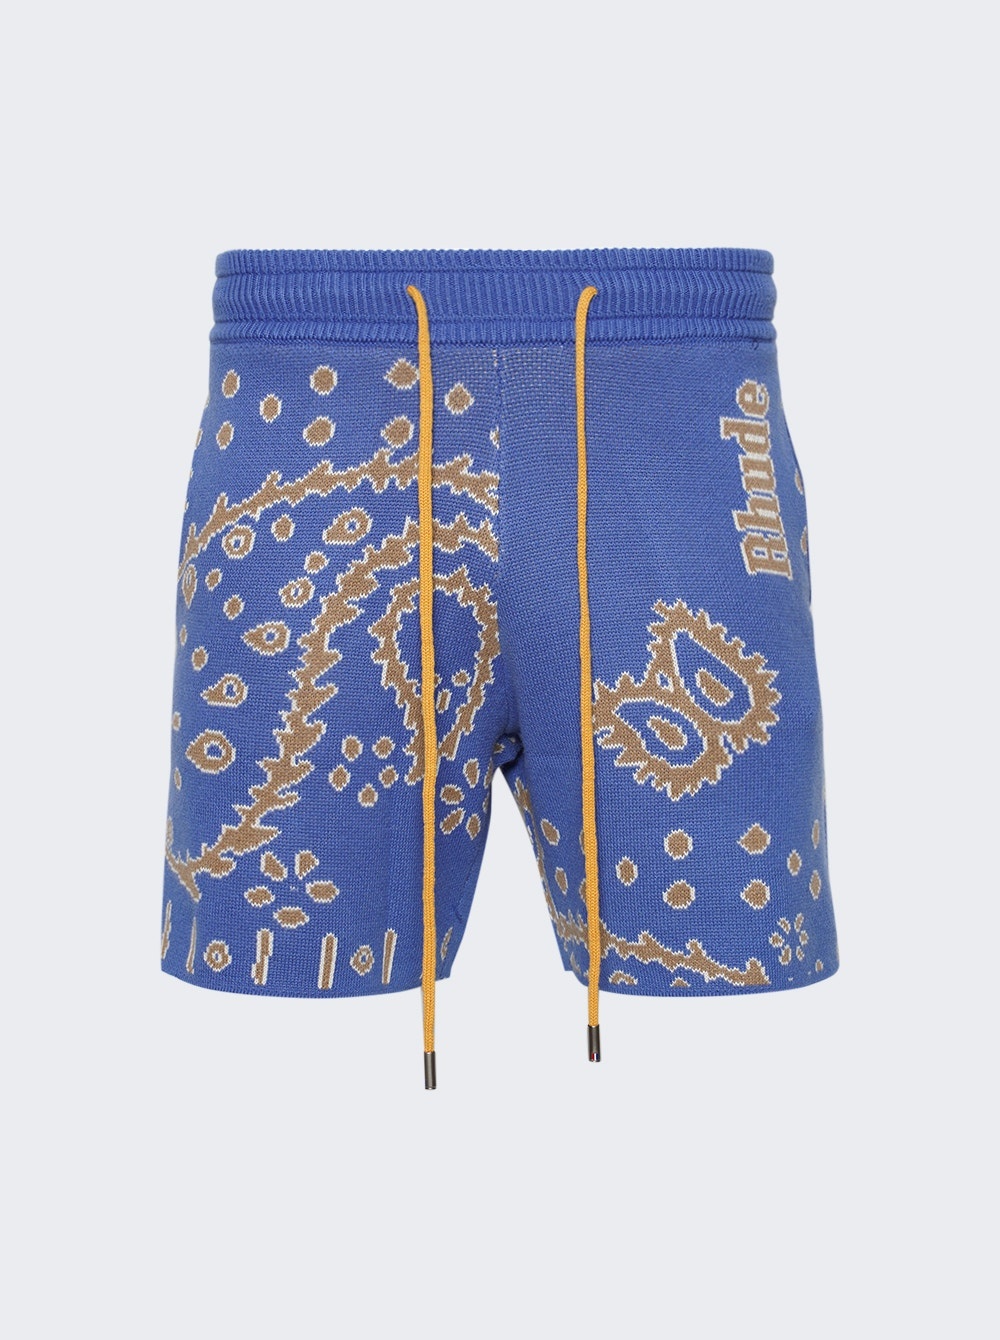 Bandana Knit Shorts Light Blue And Cream - 1